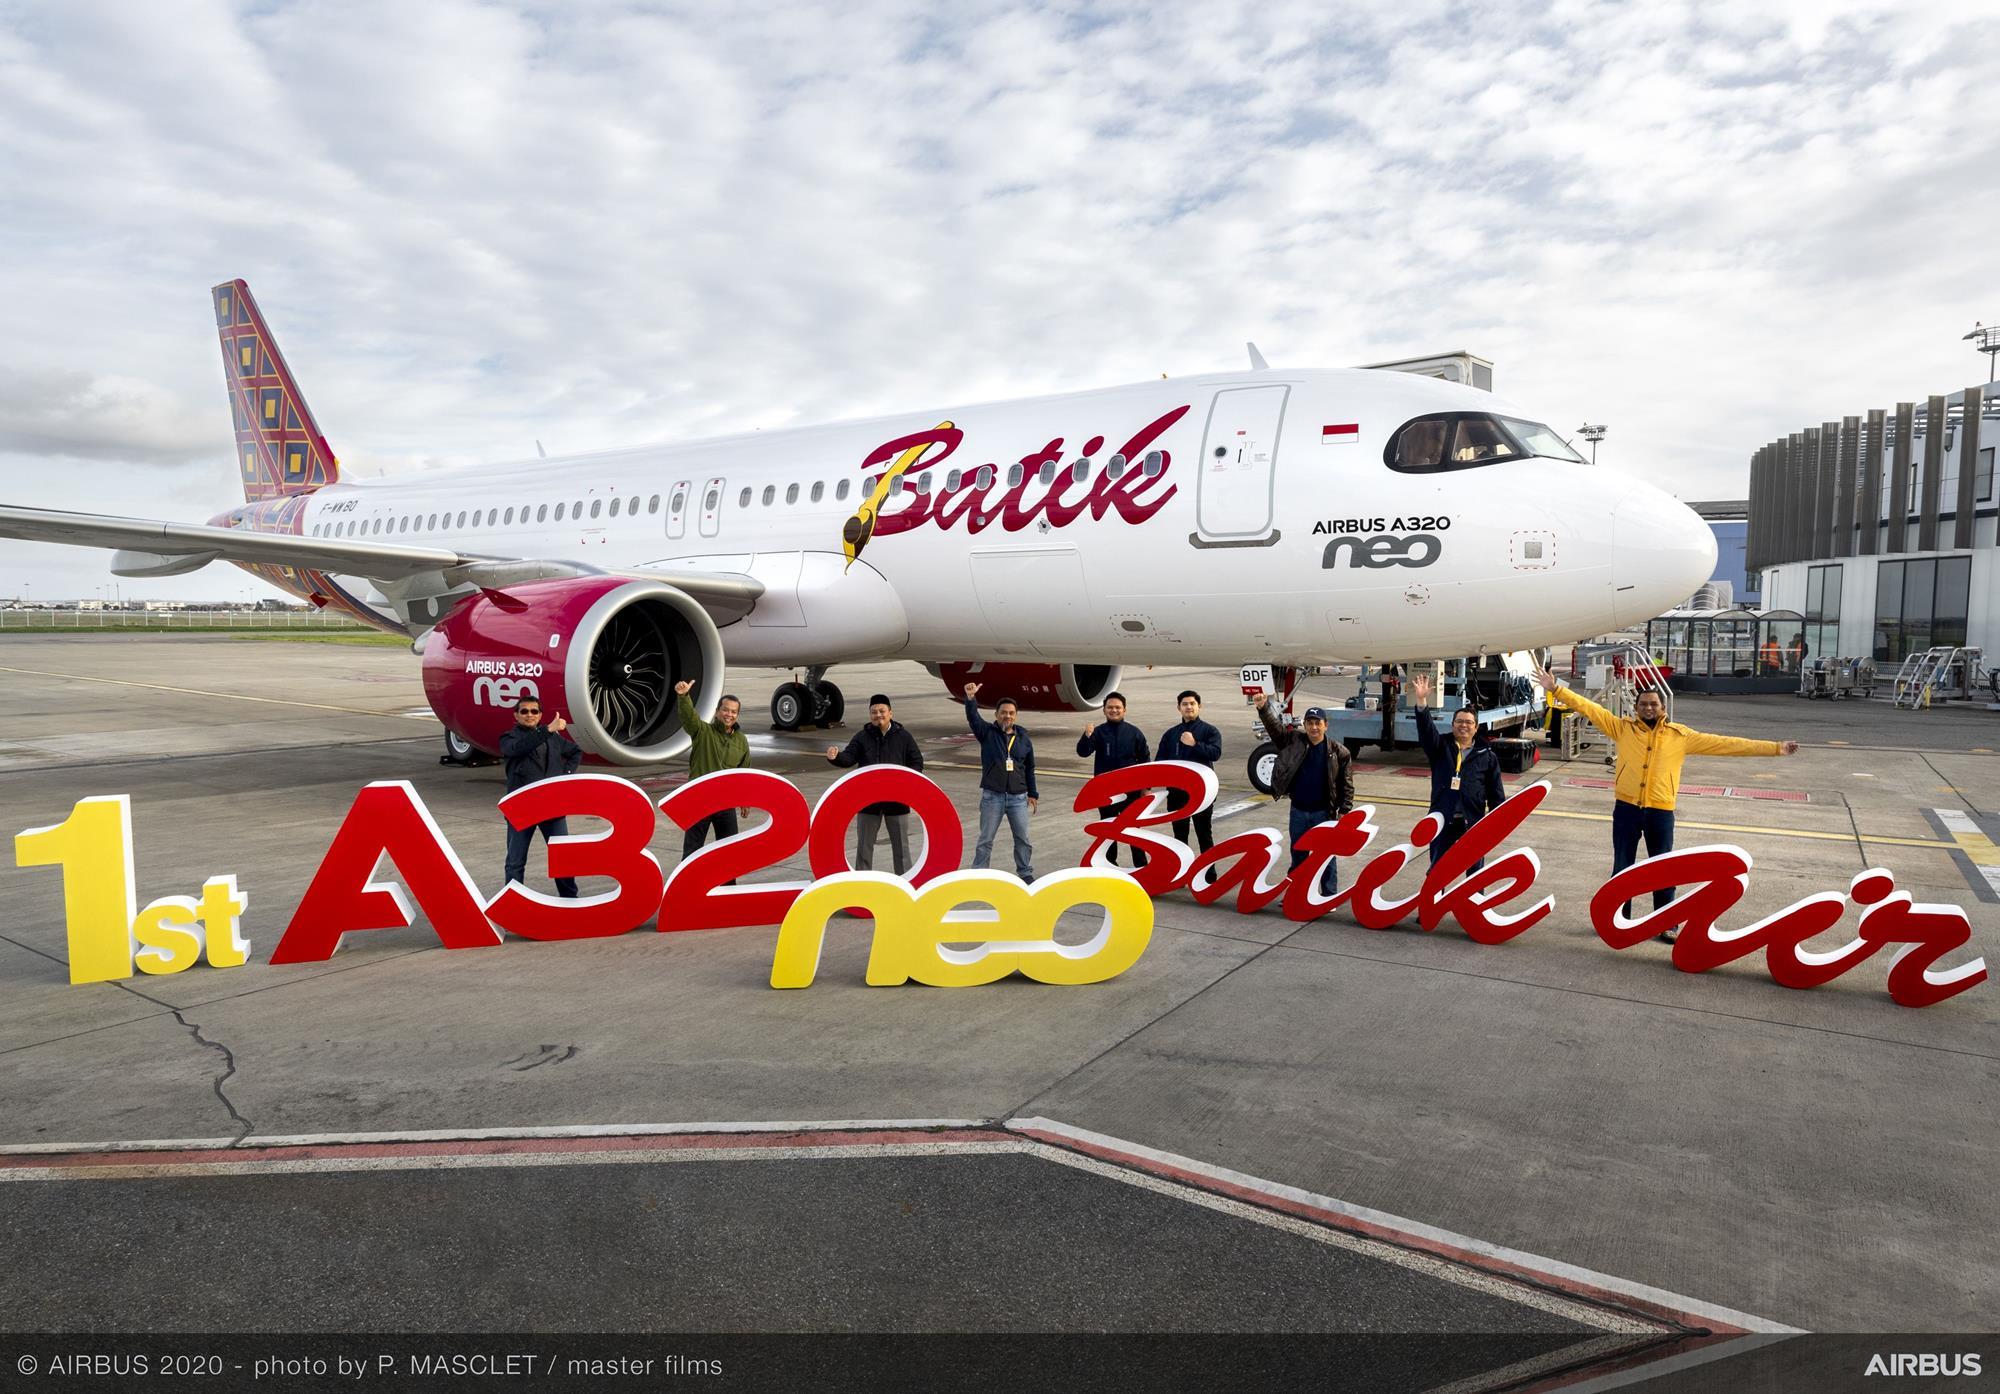 Indonesia's Batik Air enters the A320neo club | News | Flight Global